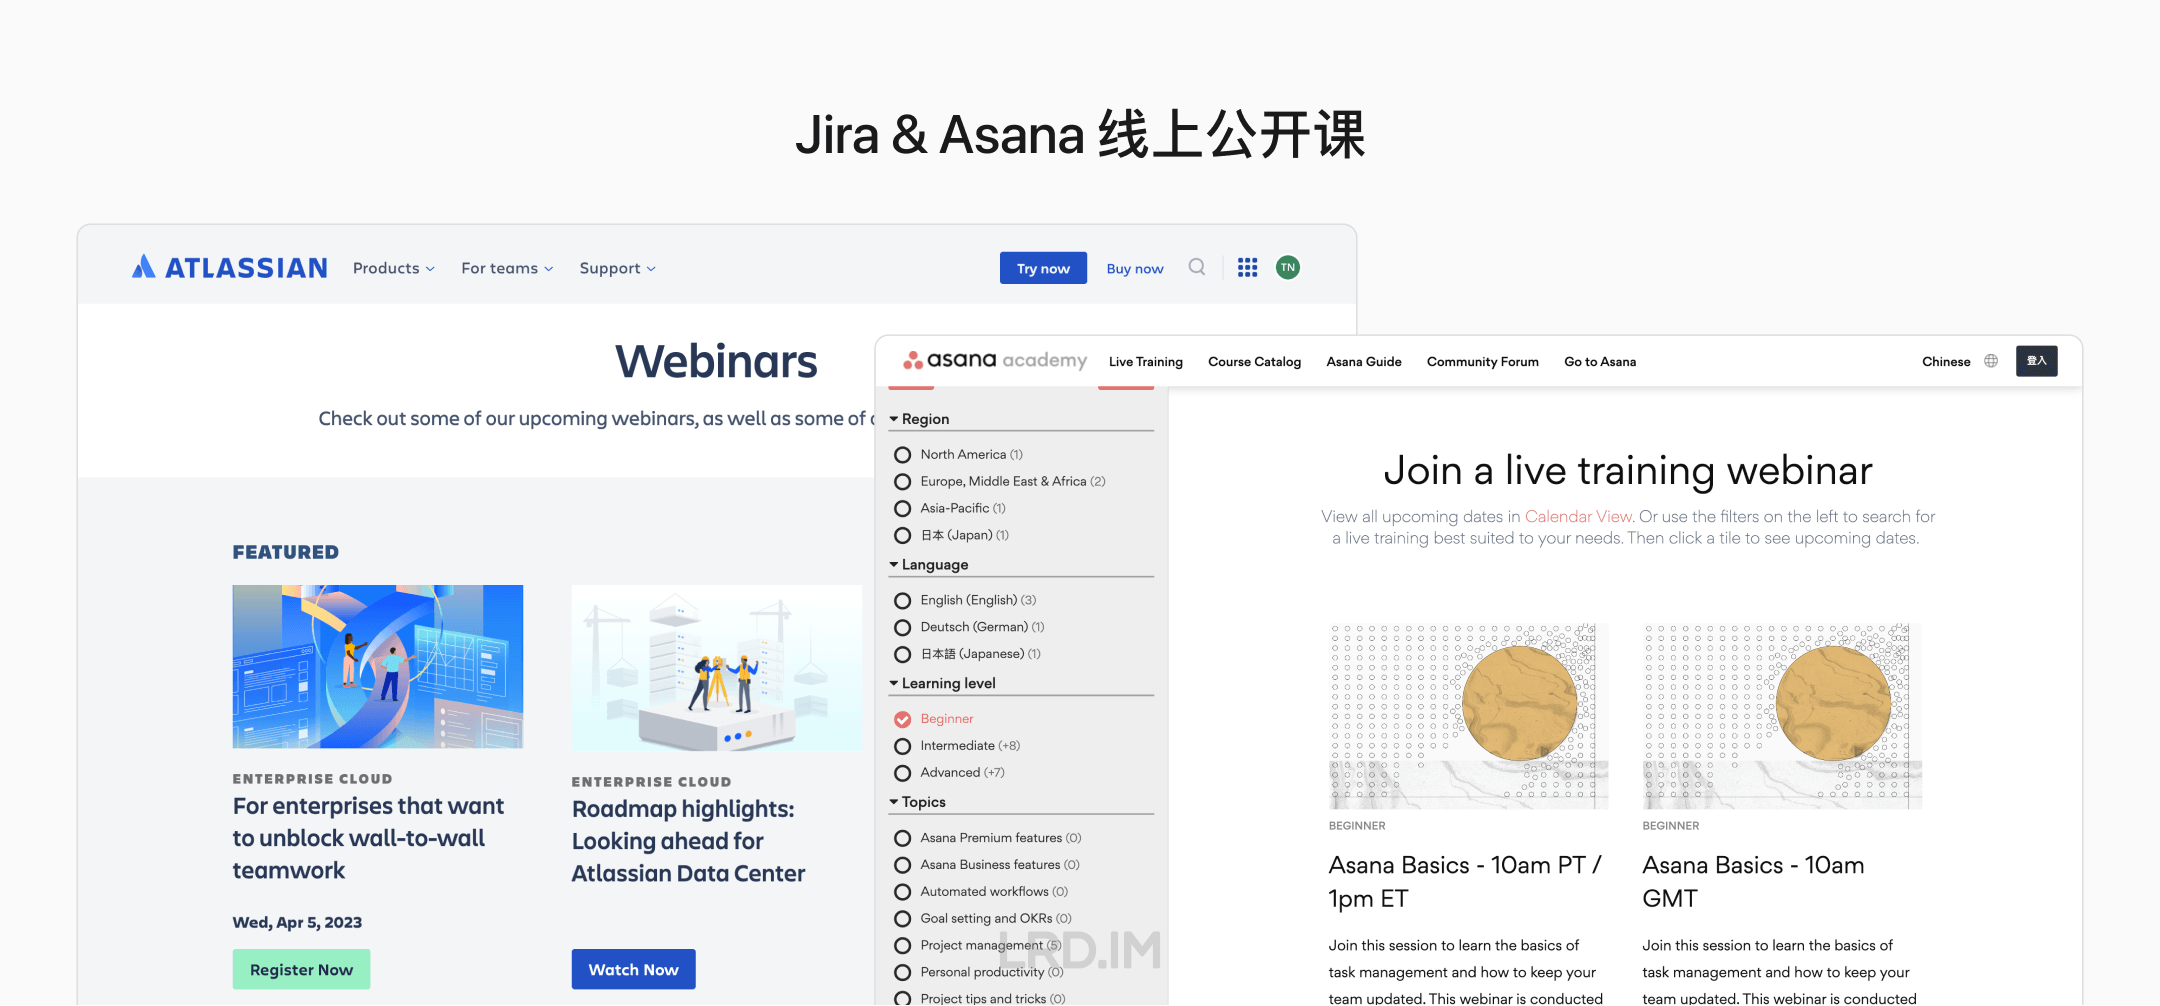 Jira 和 Asana 的 webinar 界面，由前后两张英文界面组成。前一张展示了 Asana 的 webinar 主界面，标题是 "Join a live training webinar"，下方展示了两个 webinar；后一张是 Jira 的 webinar 界面，标题是 "Webinars"，下方展示了两个 webinar。